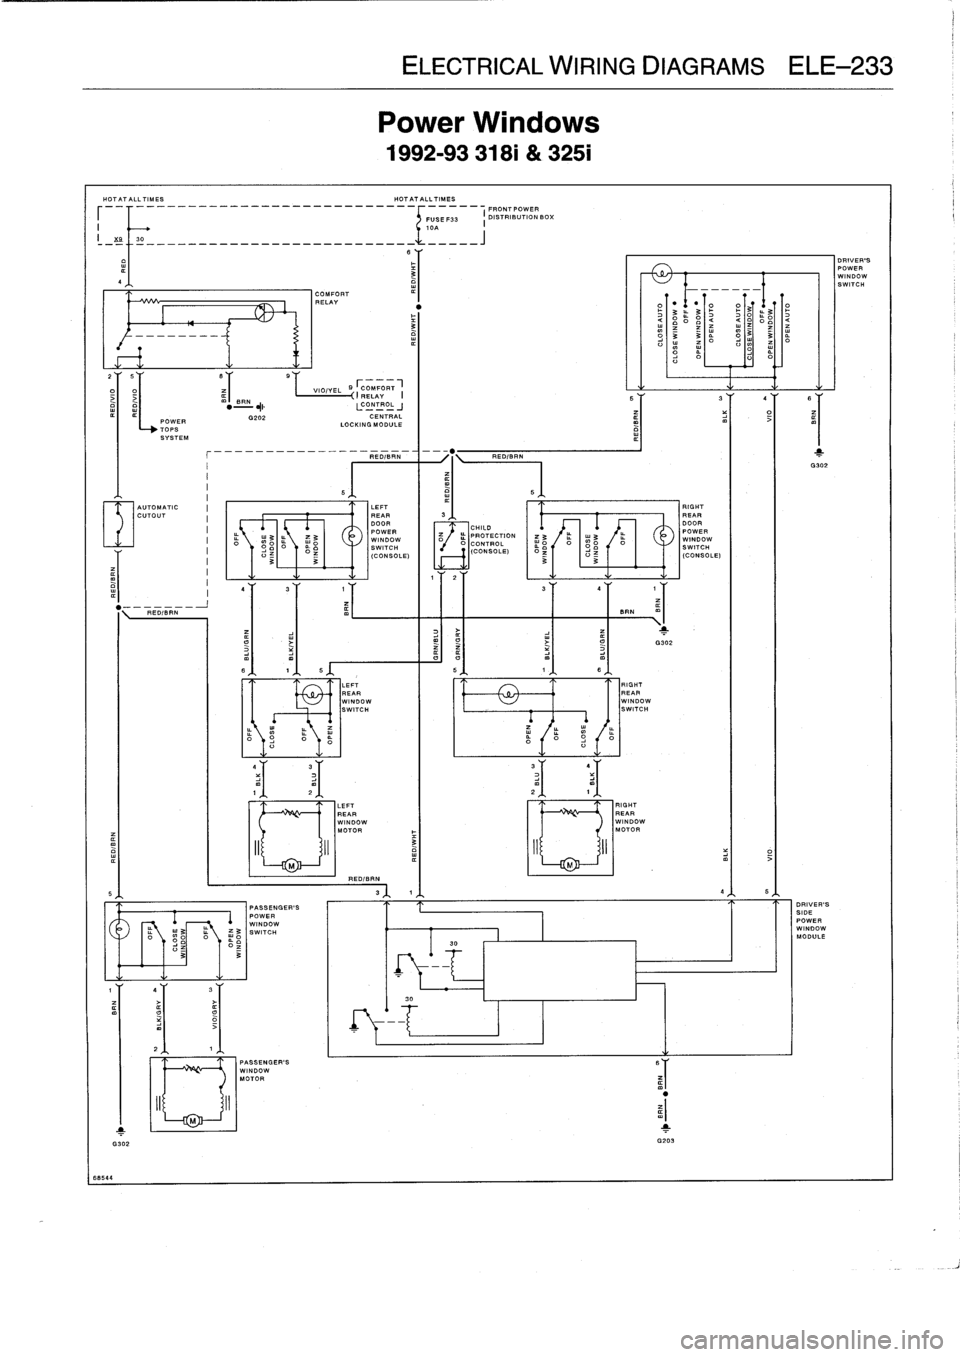 BMW 323i 1996 E36 Workshop Manual 
HO7A7AlL71ME5

	

HOTATALLTIMES

r
--

68544

i

*---AAA
POWER

AUTOMATIC
CUTOUT

O

PASSENGERS
WINDOWMOTOR

V
1
G3D2

B
r
COMFDRT~
VIOIYEL
(IRELAY
I

ELECTRICAL
WIRING
DIAGRAMS
ELE-233

Power
Windo